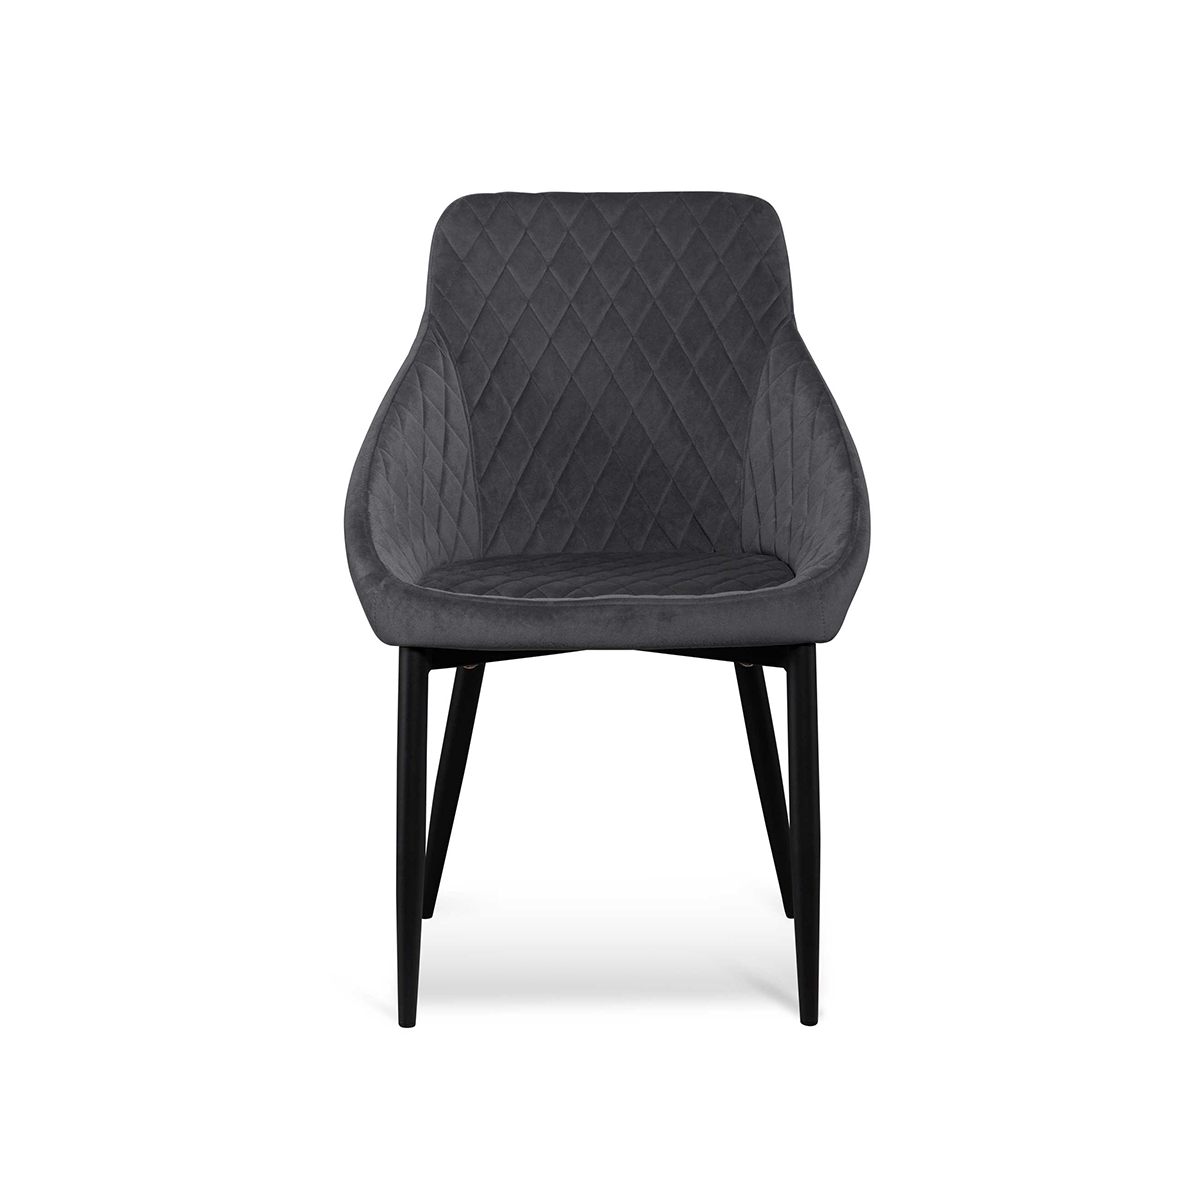 FondHouse Bacome Dining Chair - Grey Velvet in Black Legs